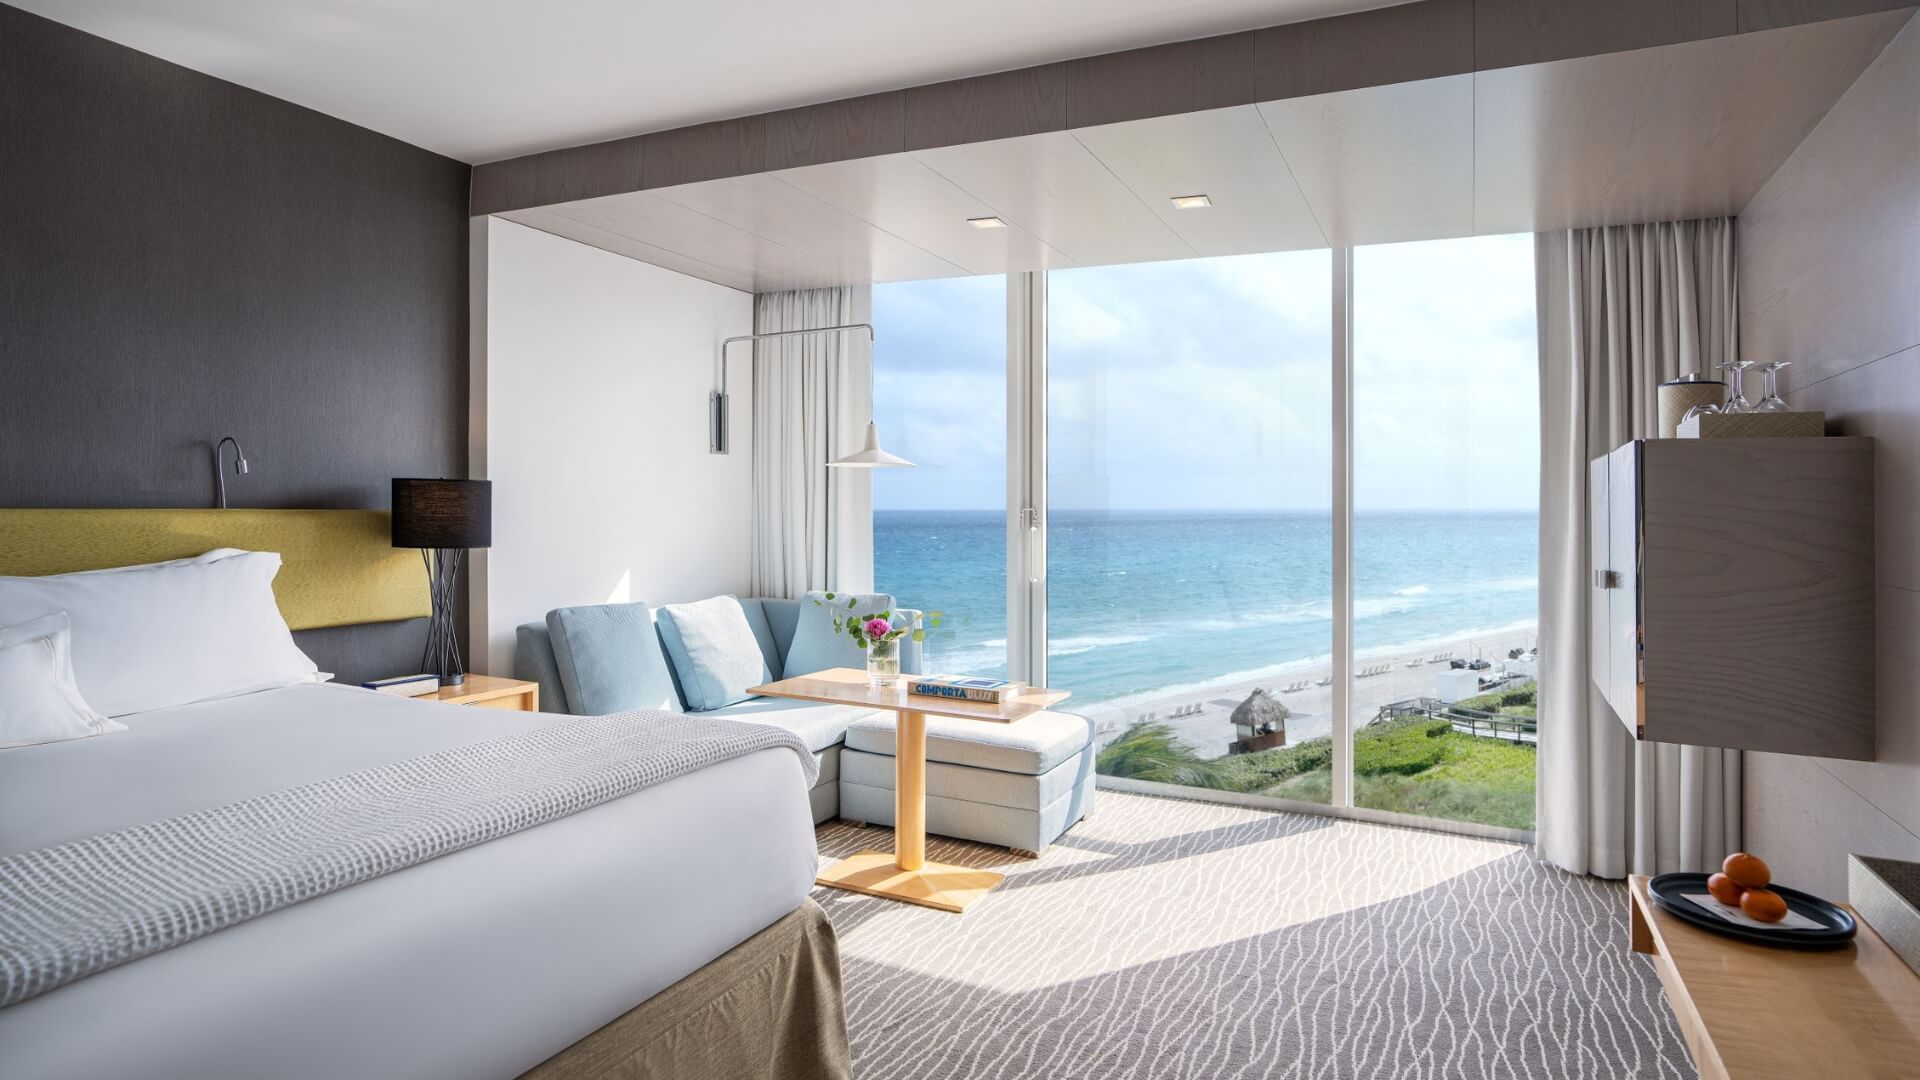 Oceanview guestroom at The Boca Raton Beach Club luxury resort